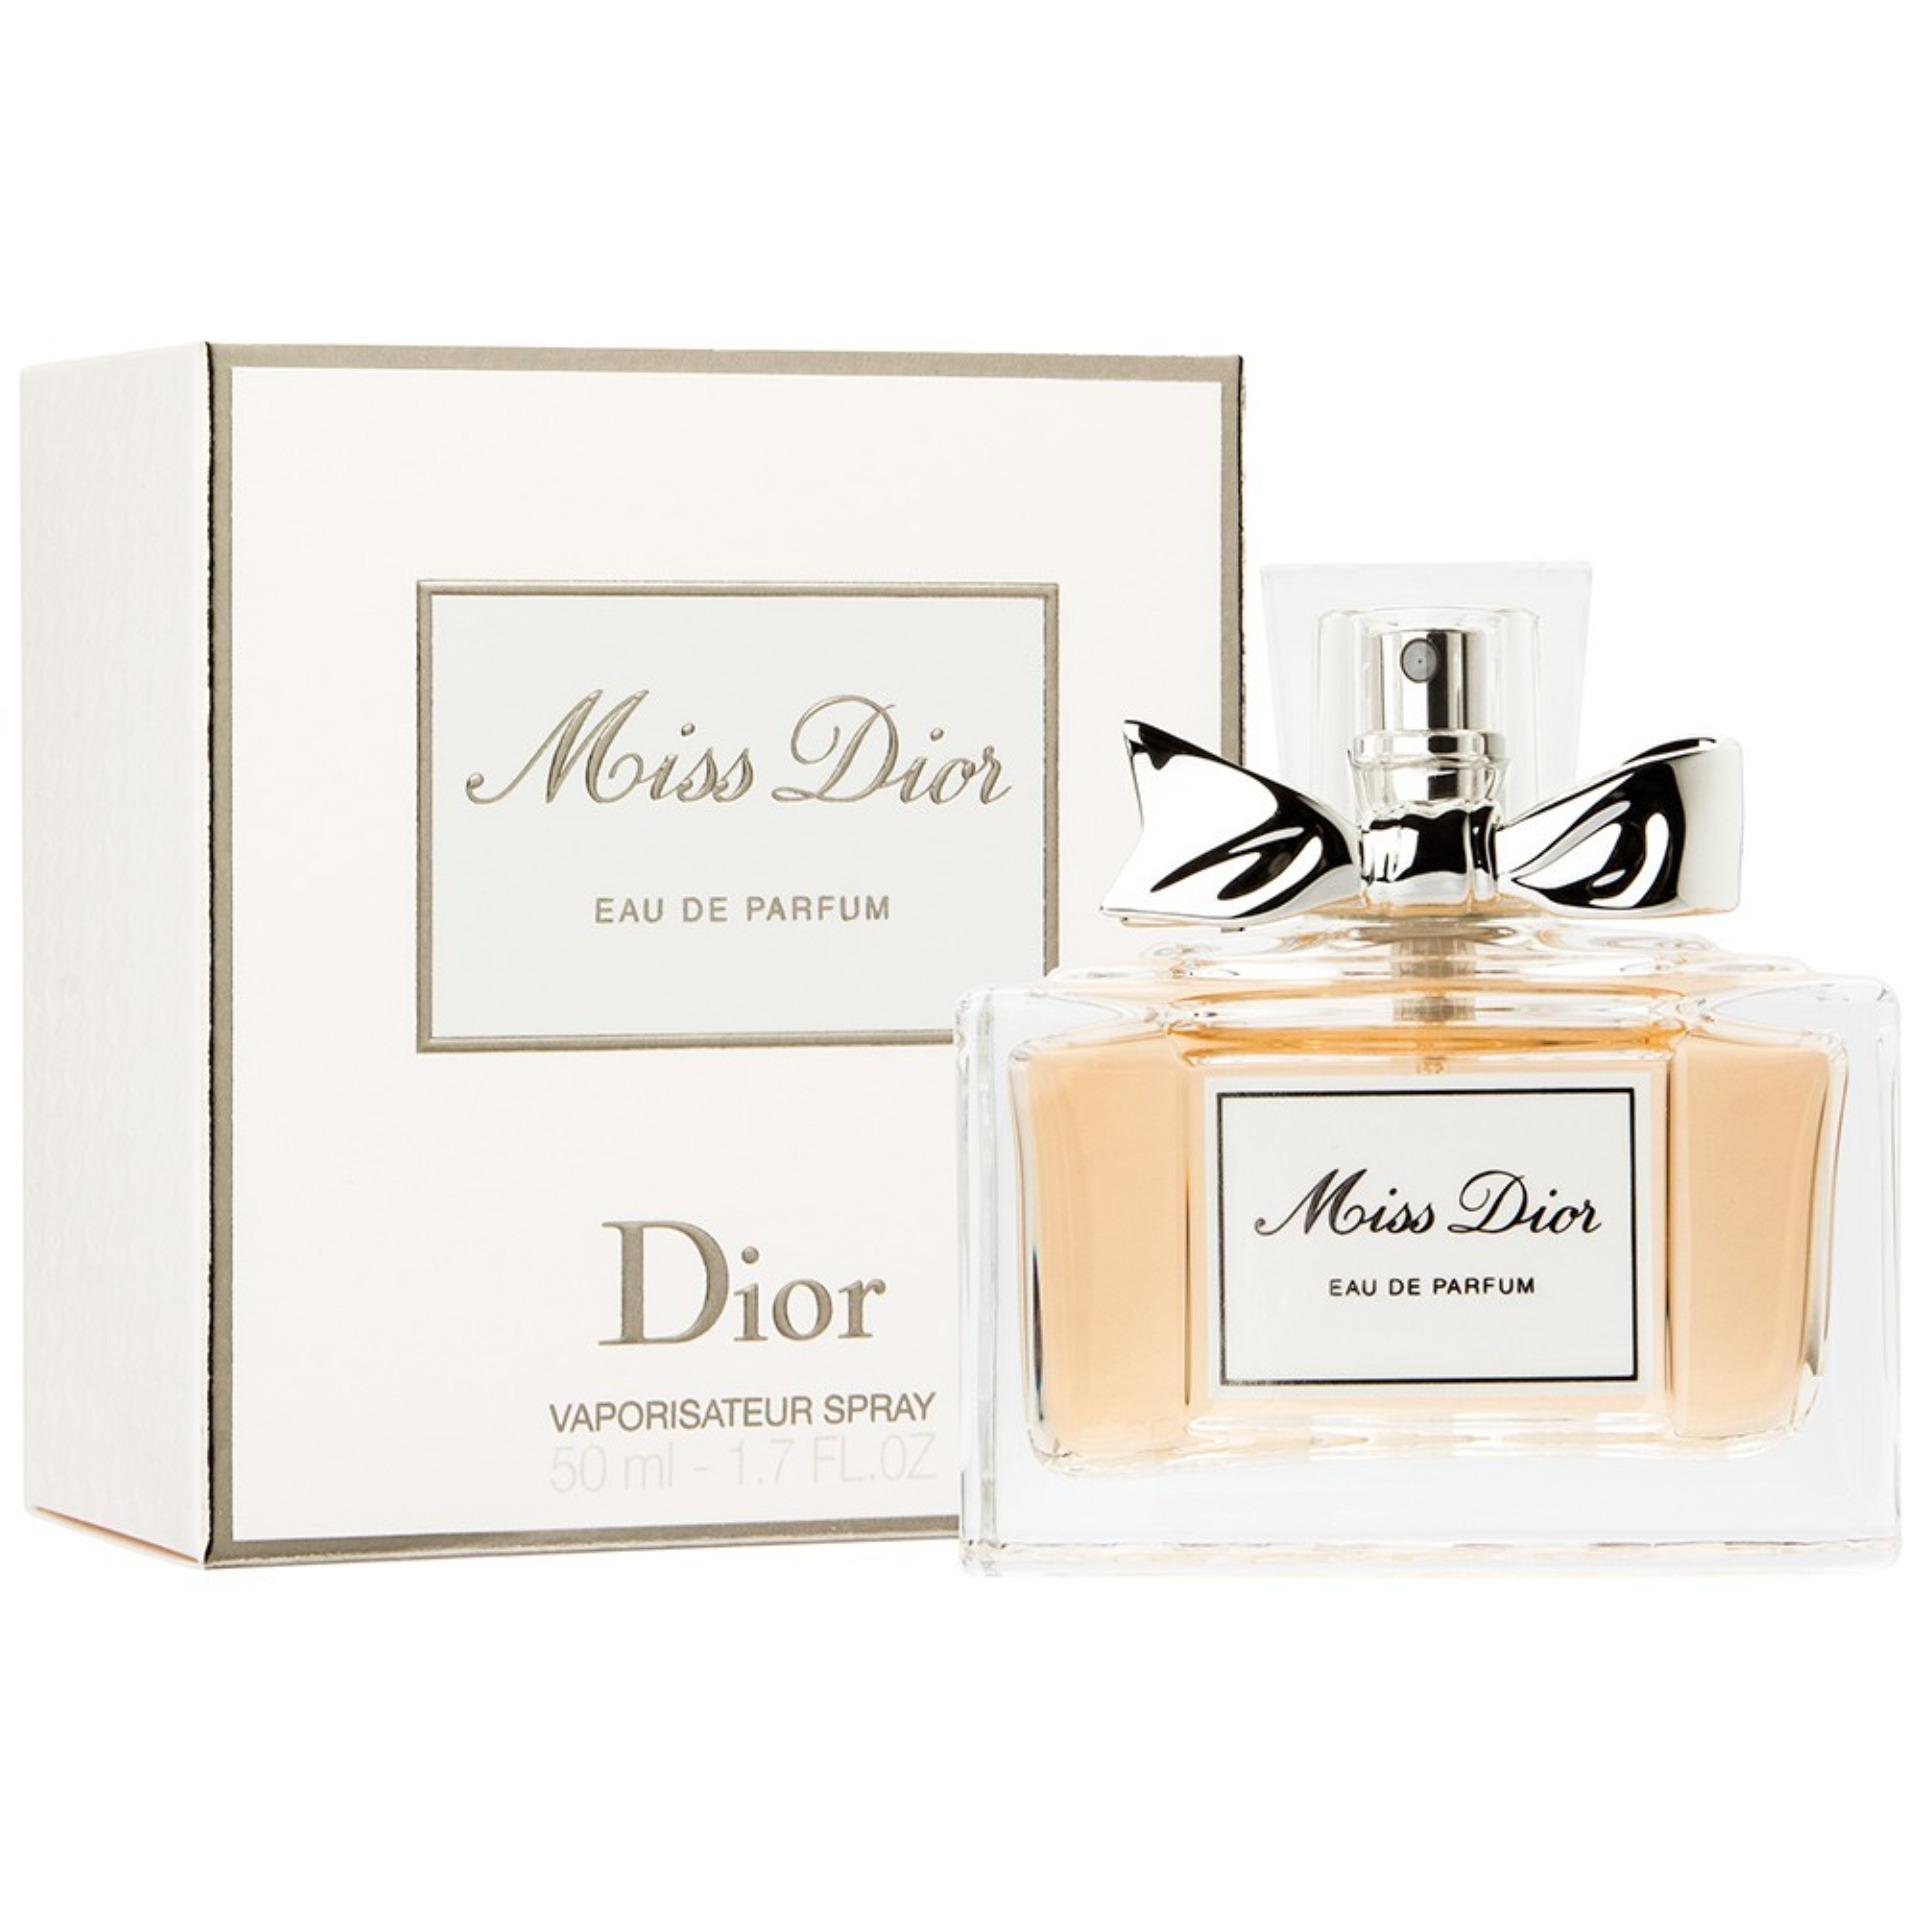 Mua Miss Dior Miss Dior Cherie by Christian Dior Eau De Parfum Spray New  Packaging Tester 34 oz Women trên Amazon Mỹ chính hãng 2023  Giaonhan247